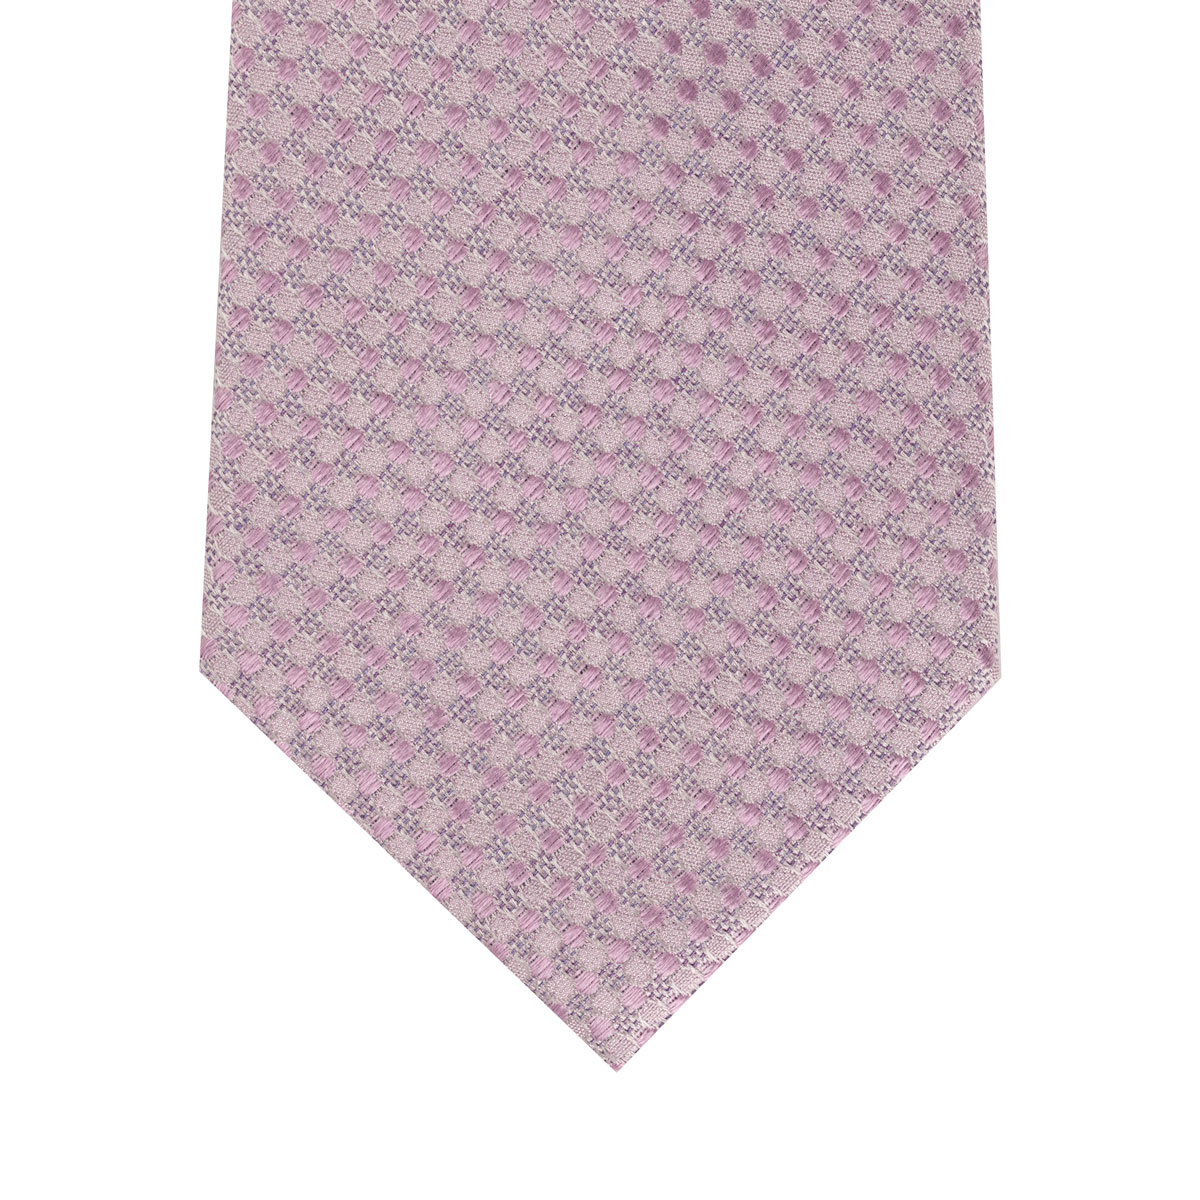 Krawatte mit Punkten in rosa